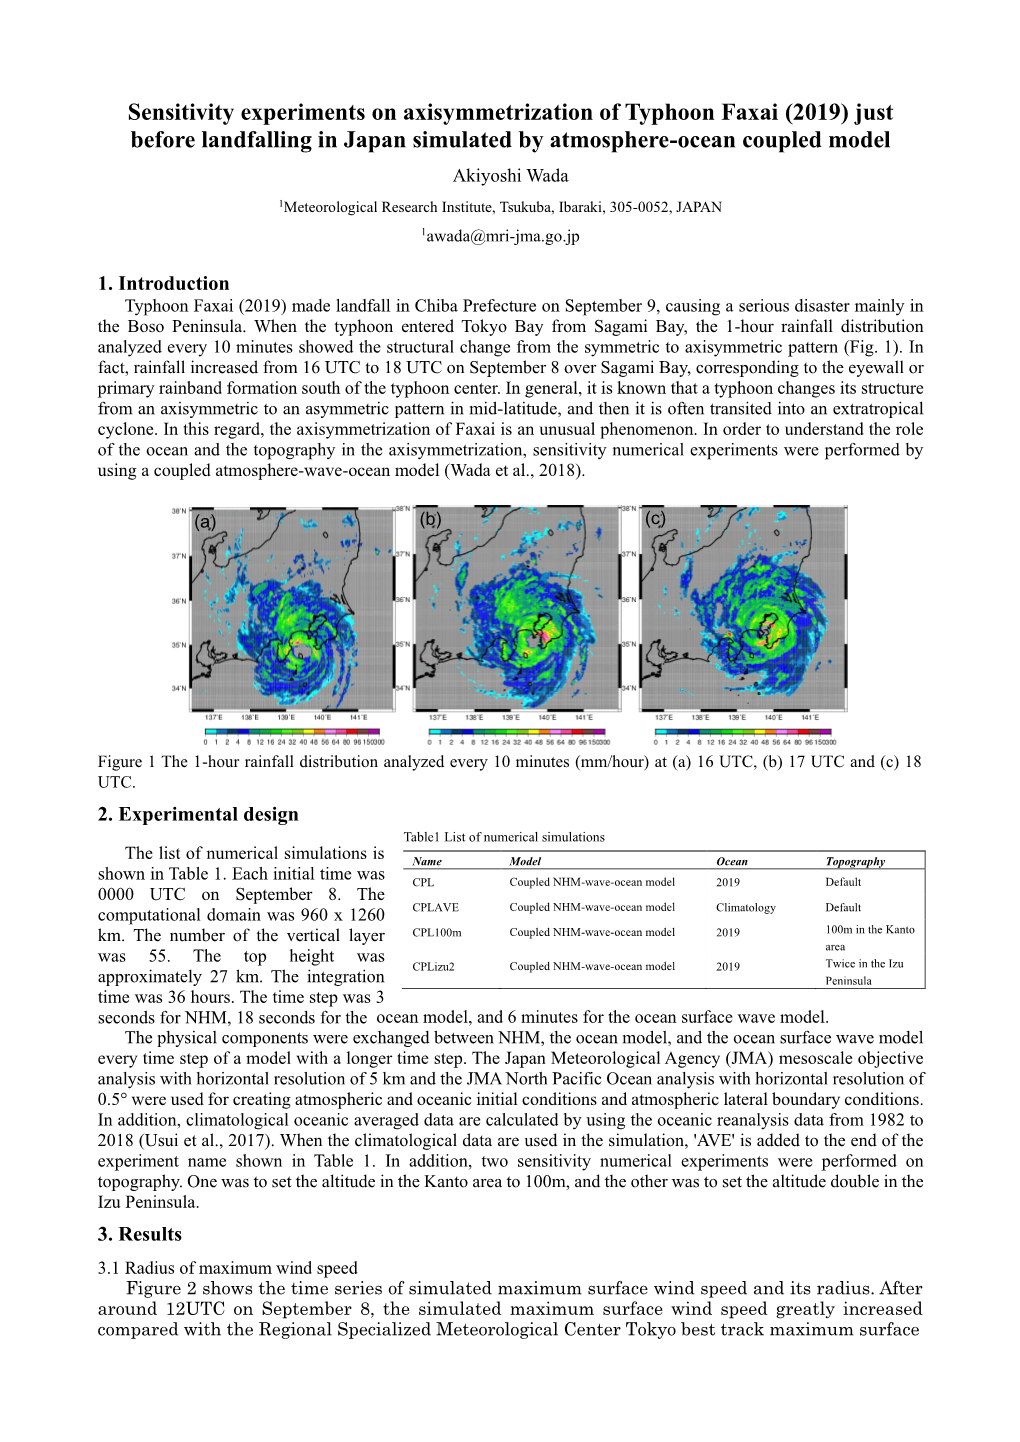 Sensitivity Experiments on Axisymmetrization of Typhoon Faxai